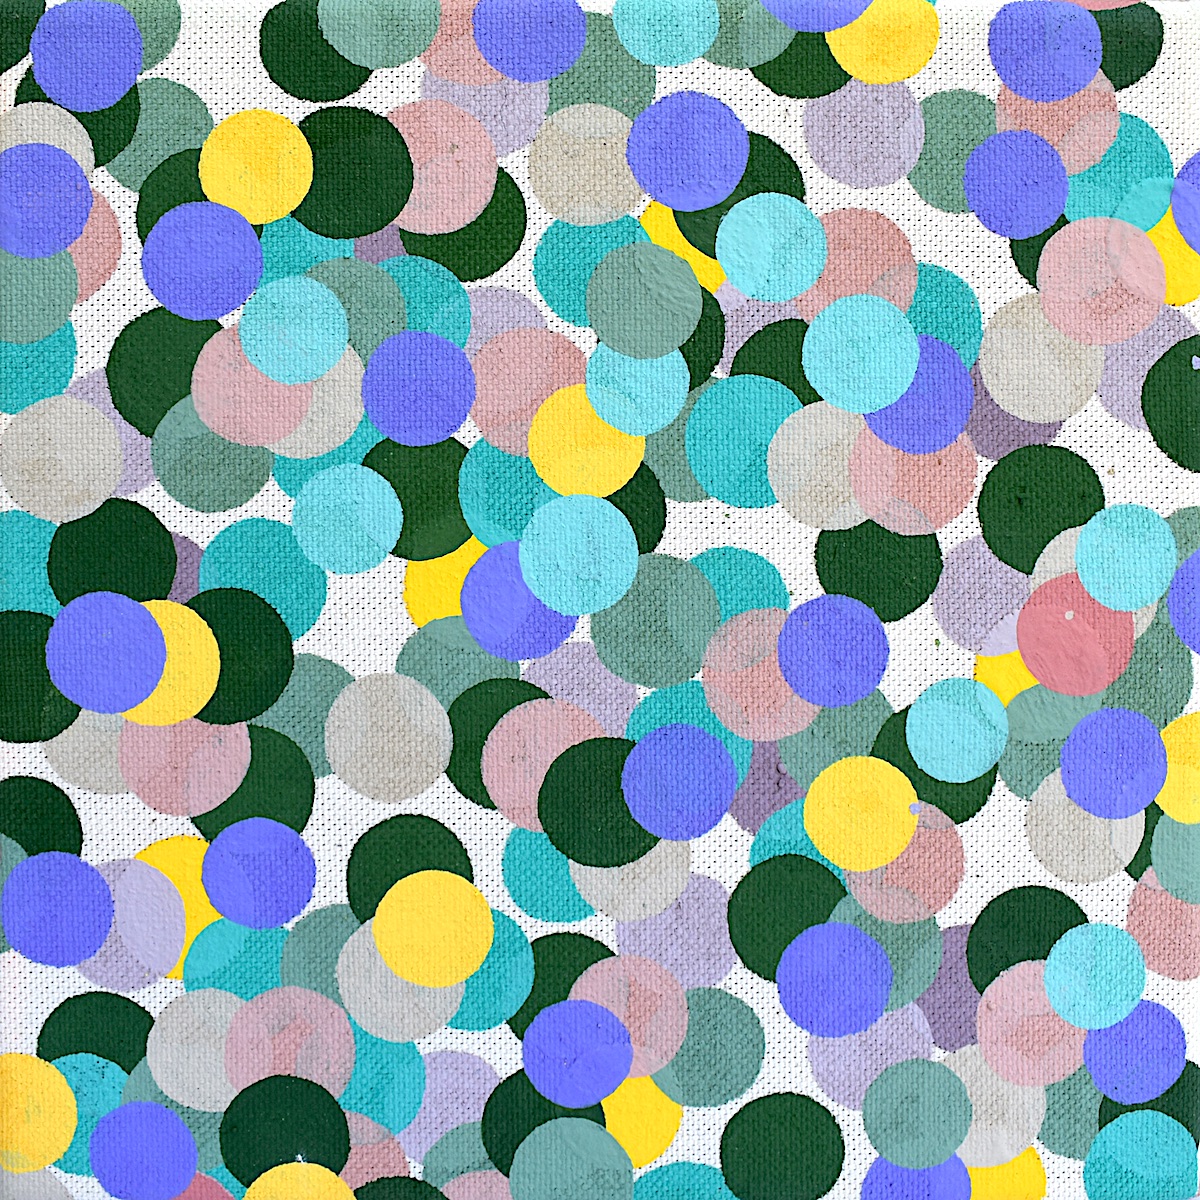 simone hamann bubbles_camouflage1 2021 19 x 19cm acrylic on cotton